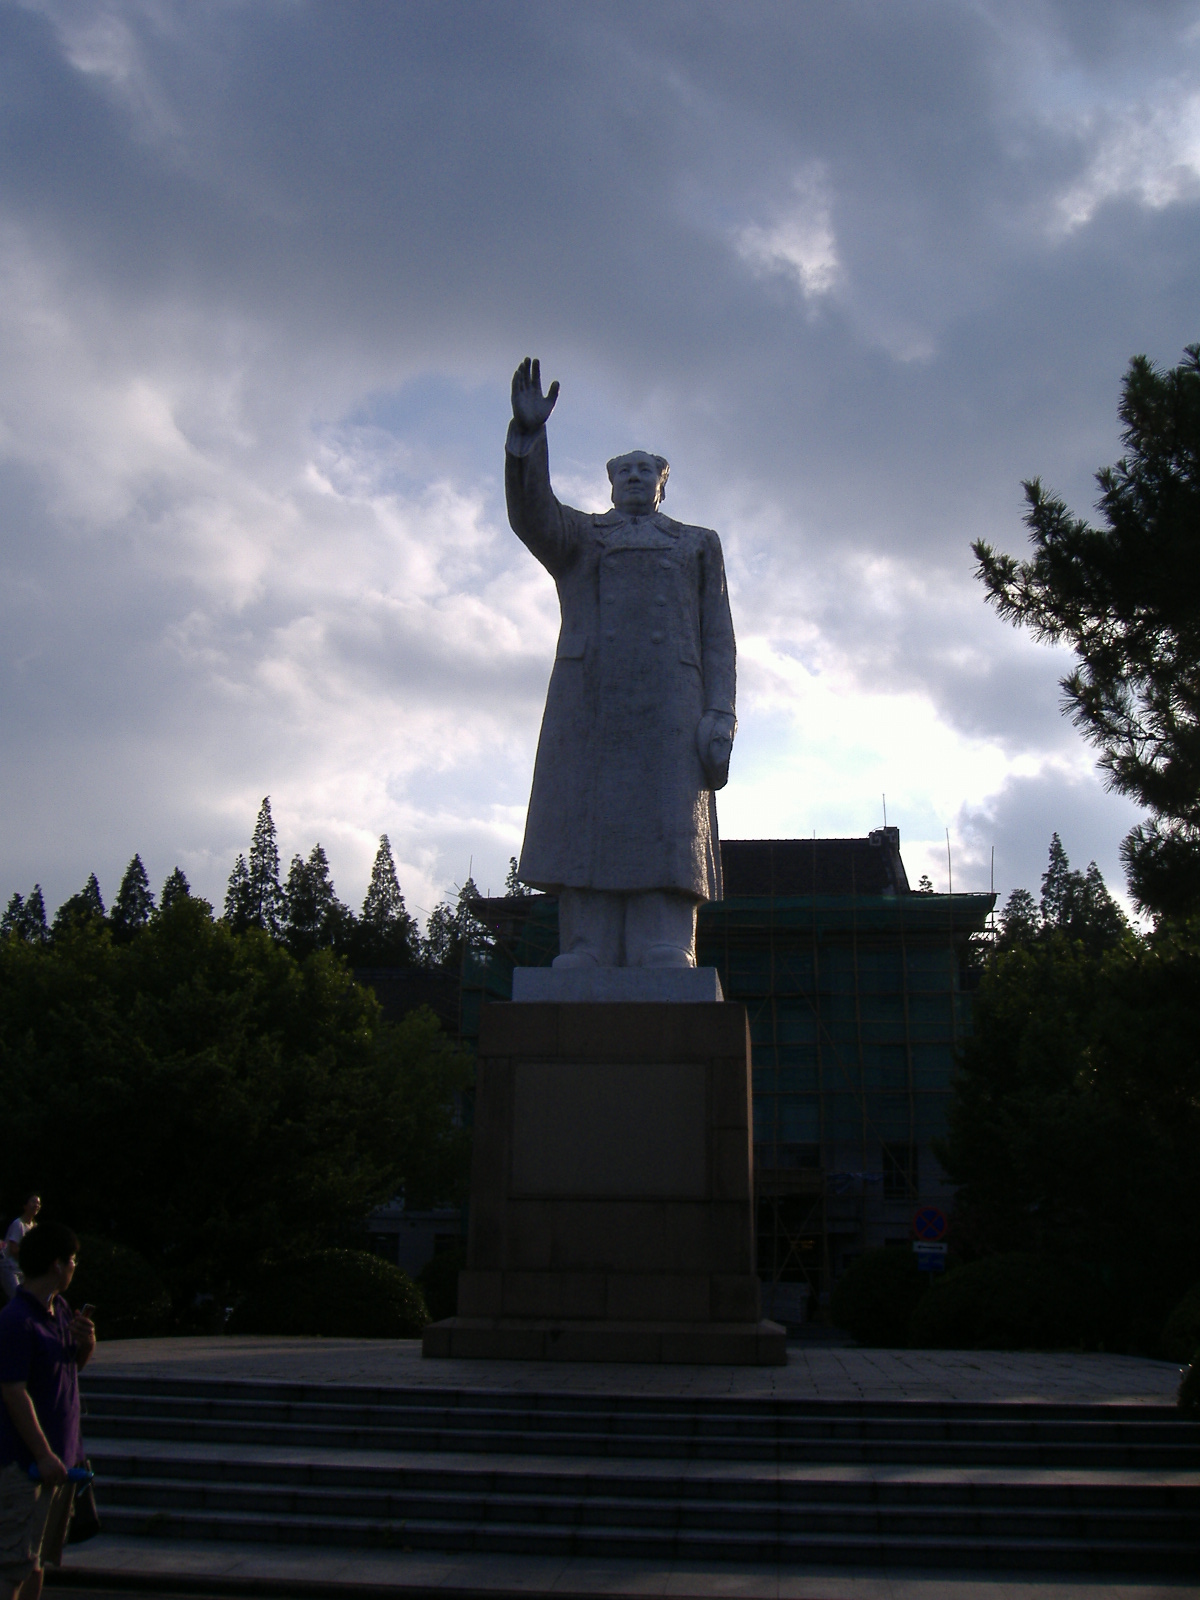 Mao Ce-Tung szobra egy egyetemi campusban - East China Normal University (华东师范大学), Putou (普陀区), Shanghai